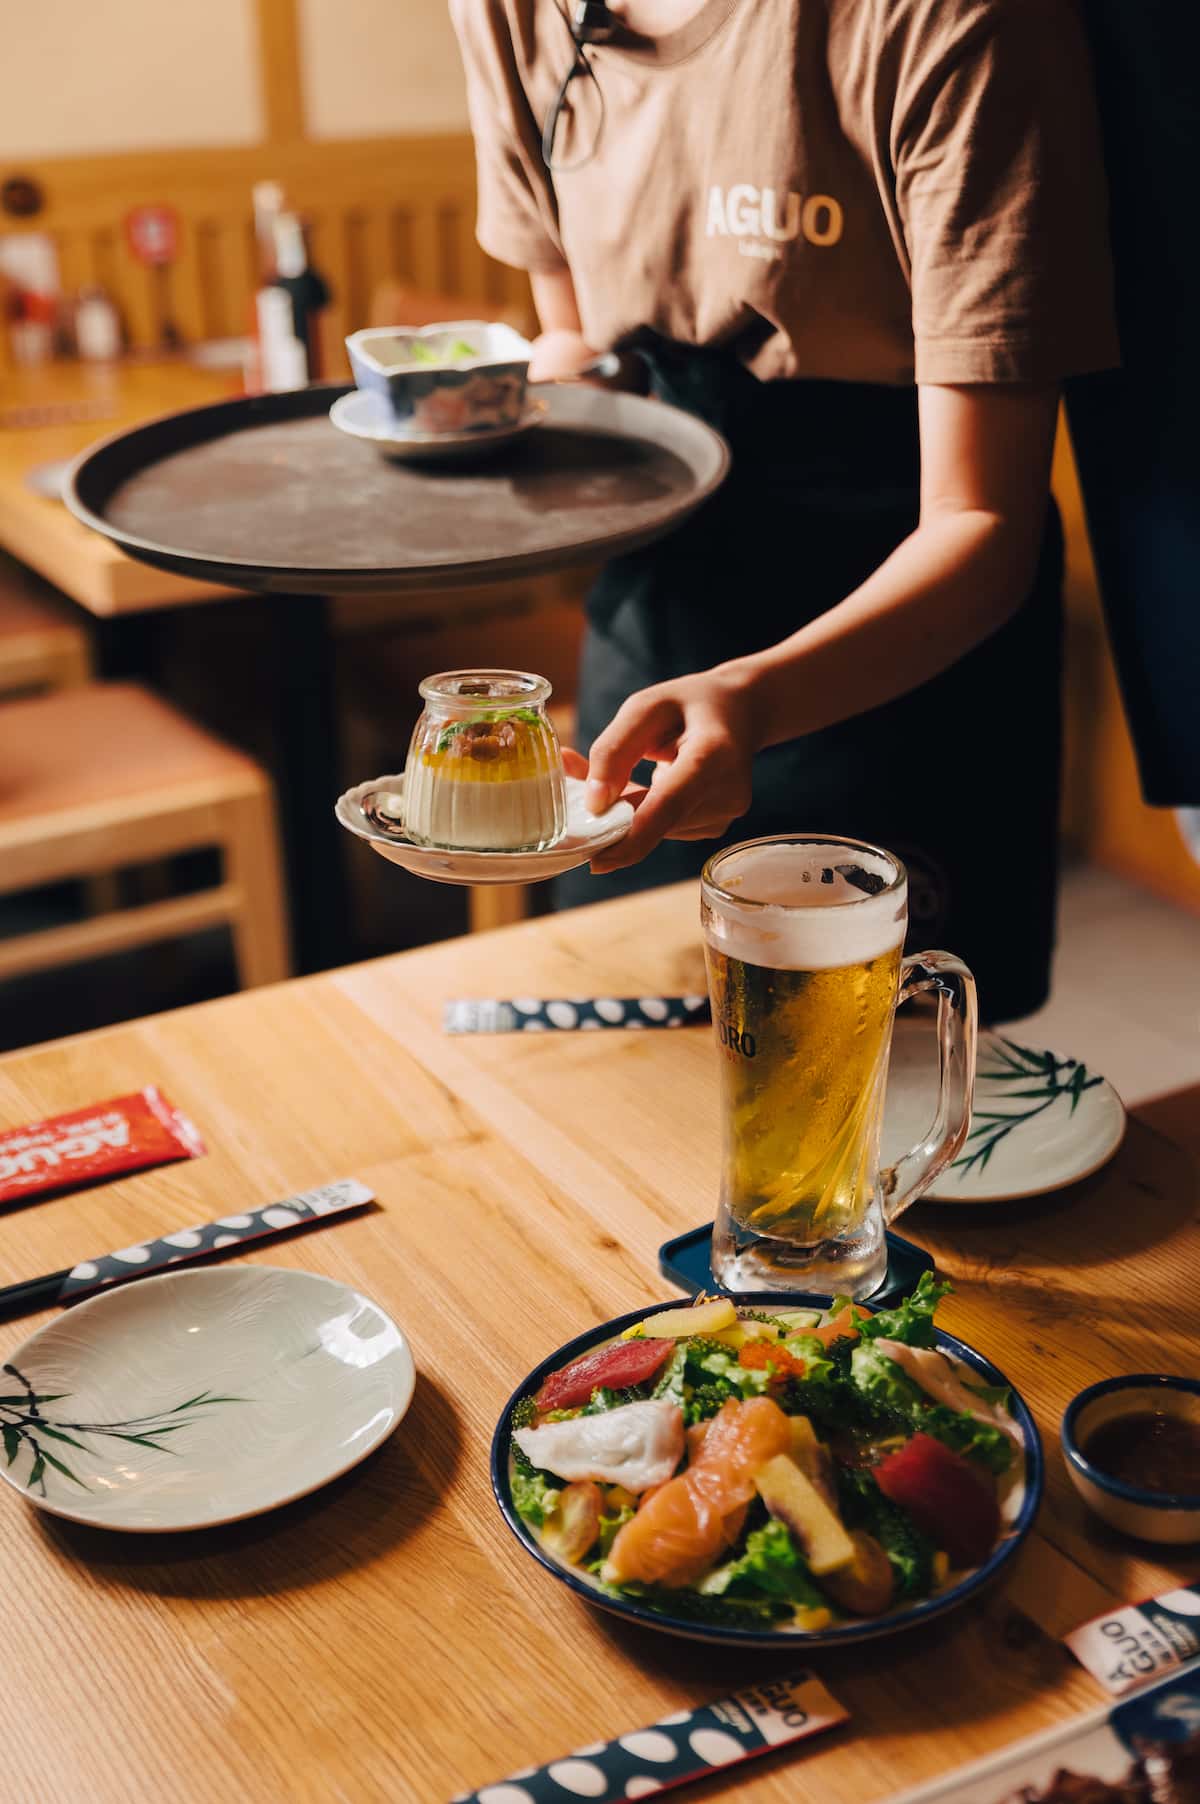 Aguo Izakaya table setting with a seafood salad and Sapporo.